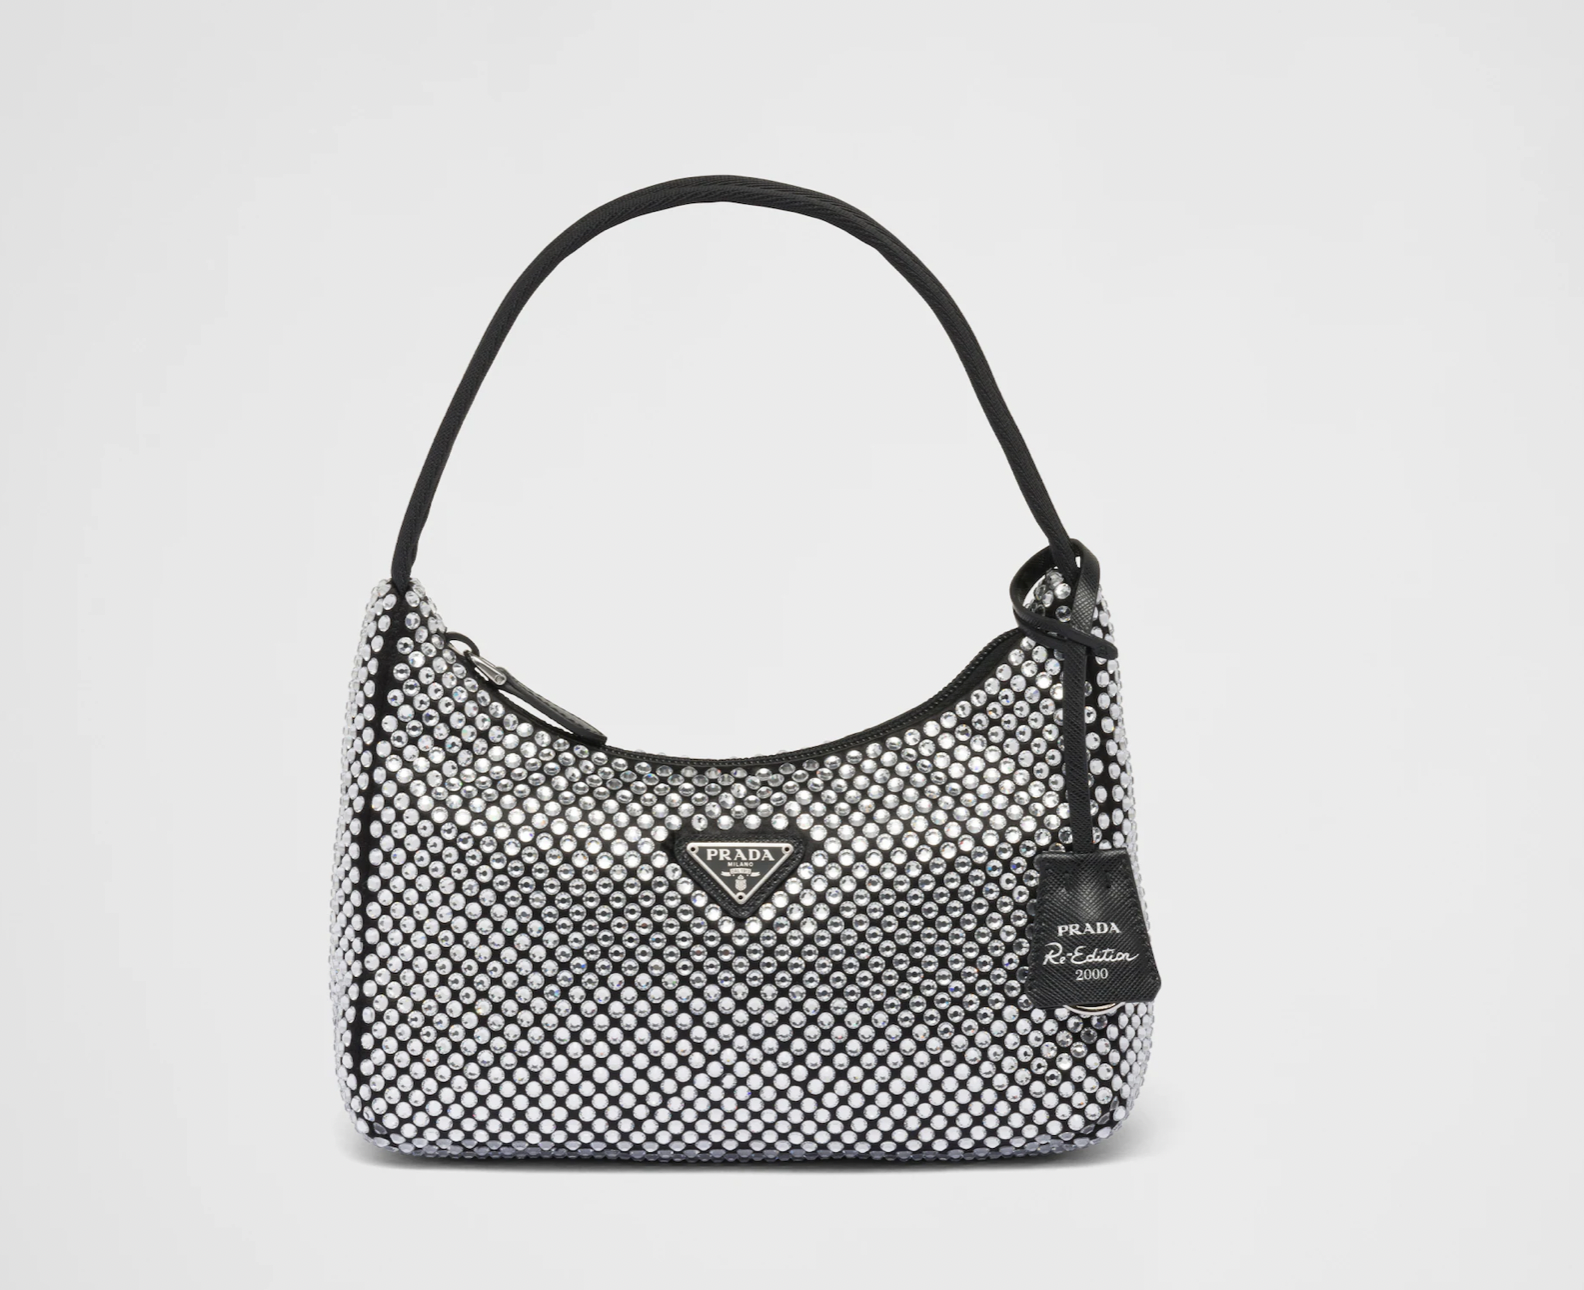 are-luxury-brands-declining?-prada-reduced-their-handbag-price-by-$350 